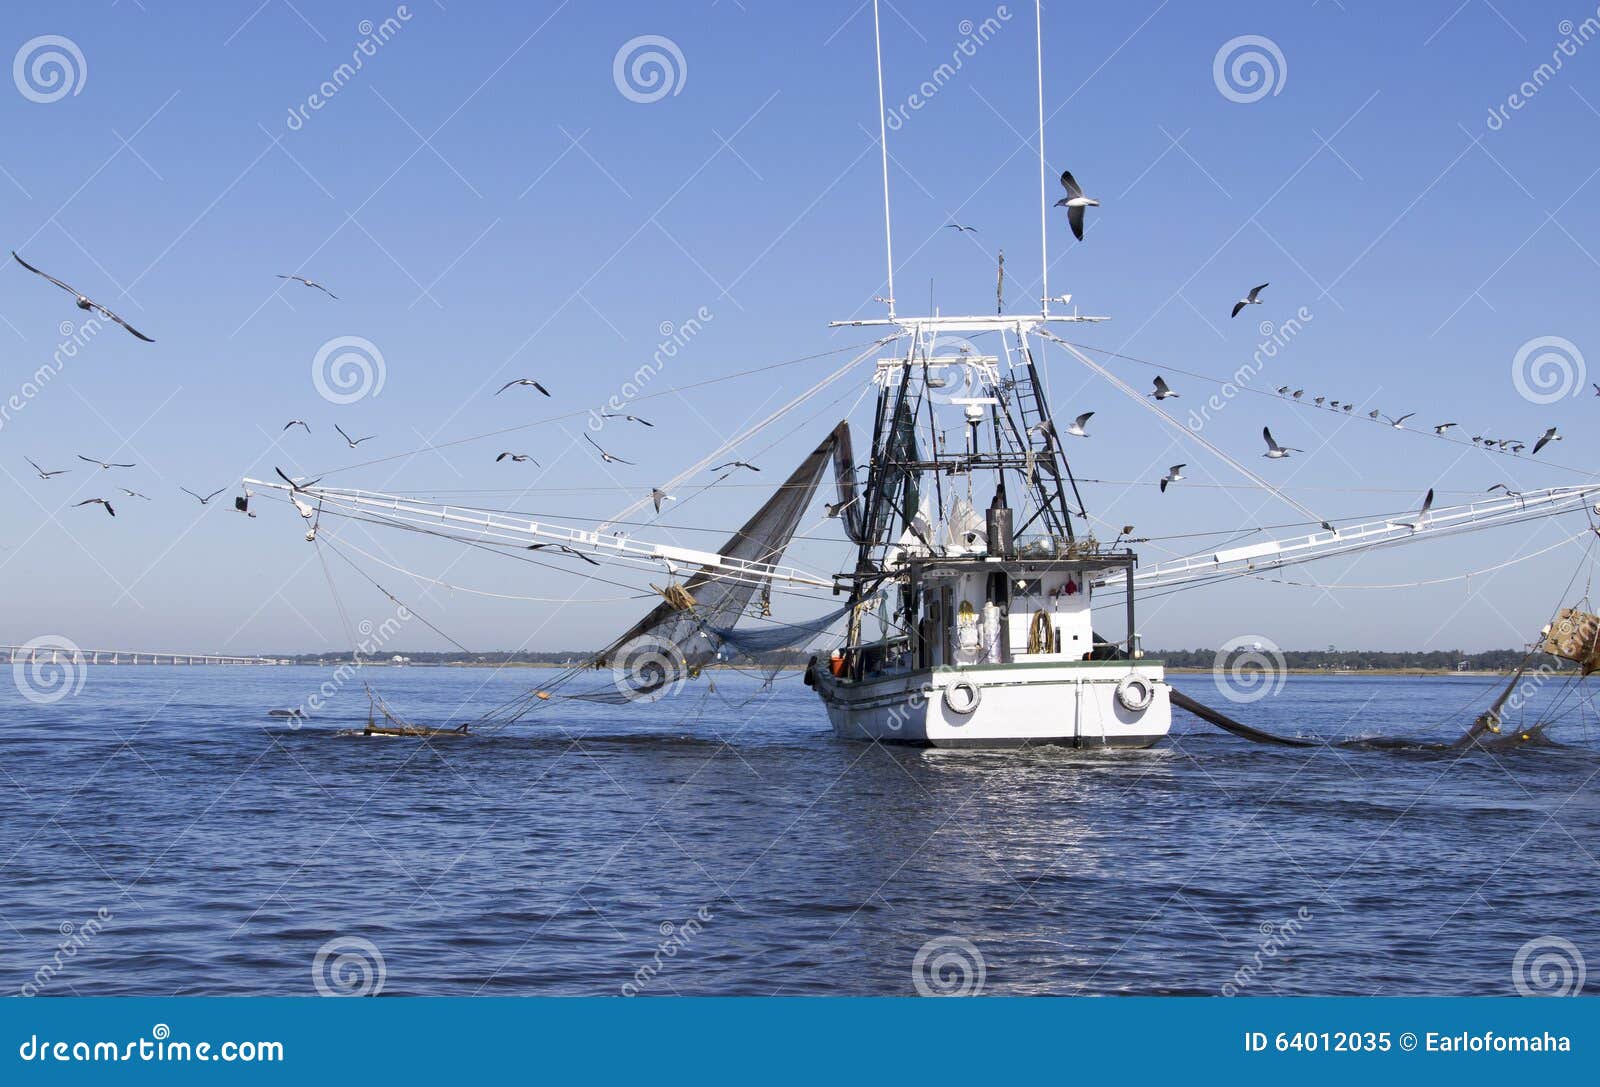 https://thumbs.dreamstime.com/z/gulf-coast-shrimping-boat-small-dolphin-off-left-net-gulls-64012035.jpg